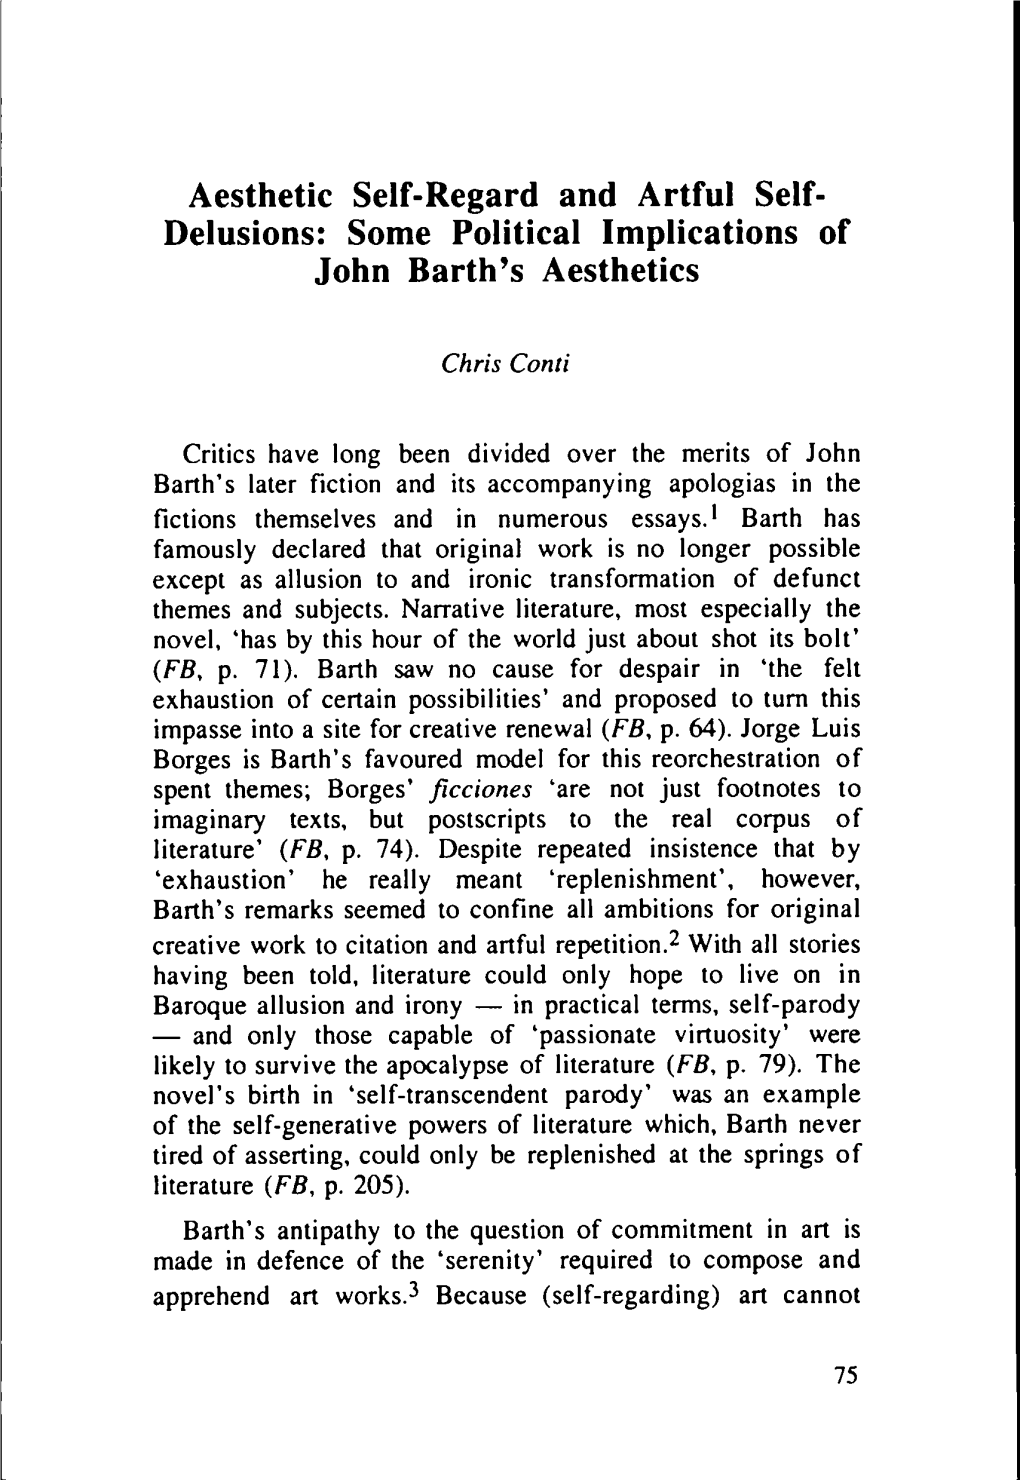 Some Political Implications of John Barth's Aesthetics